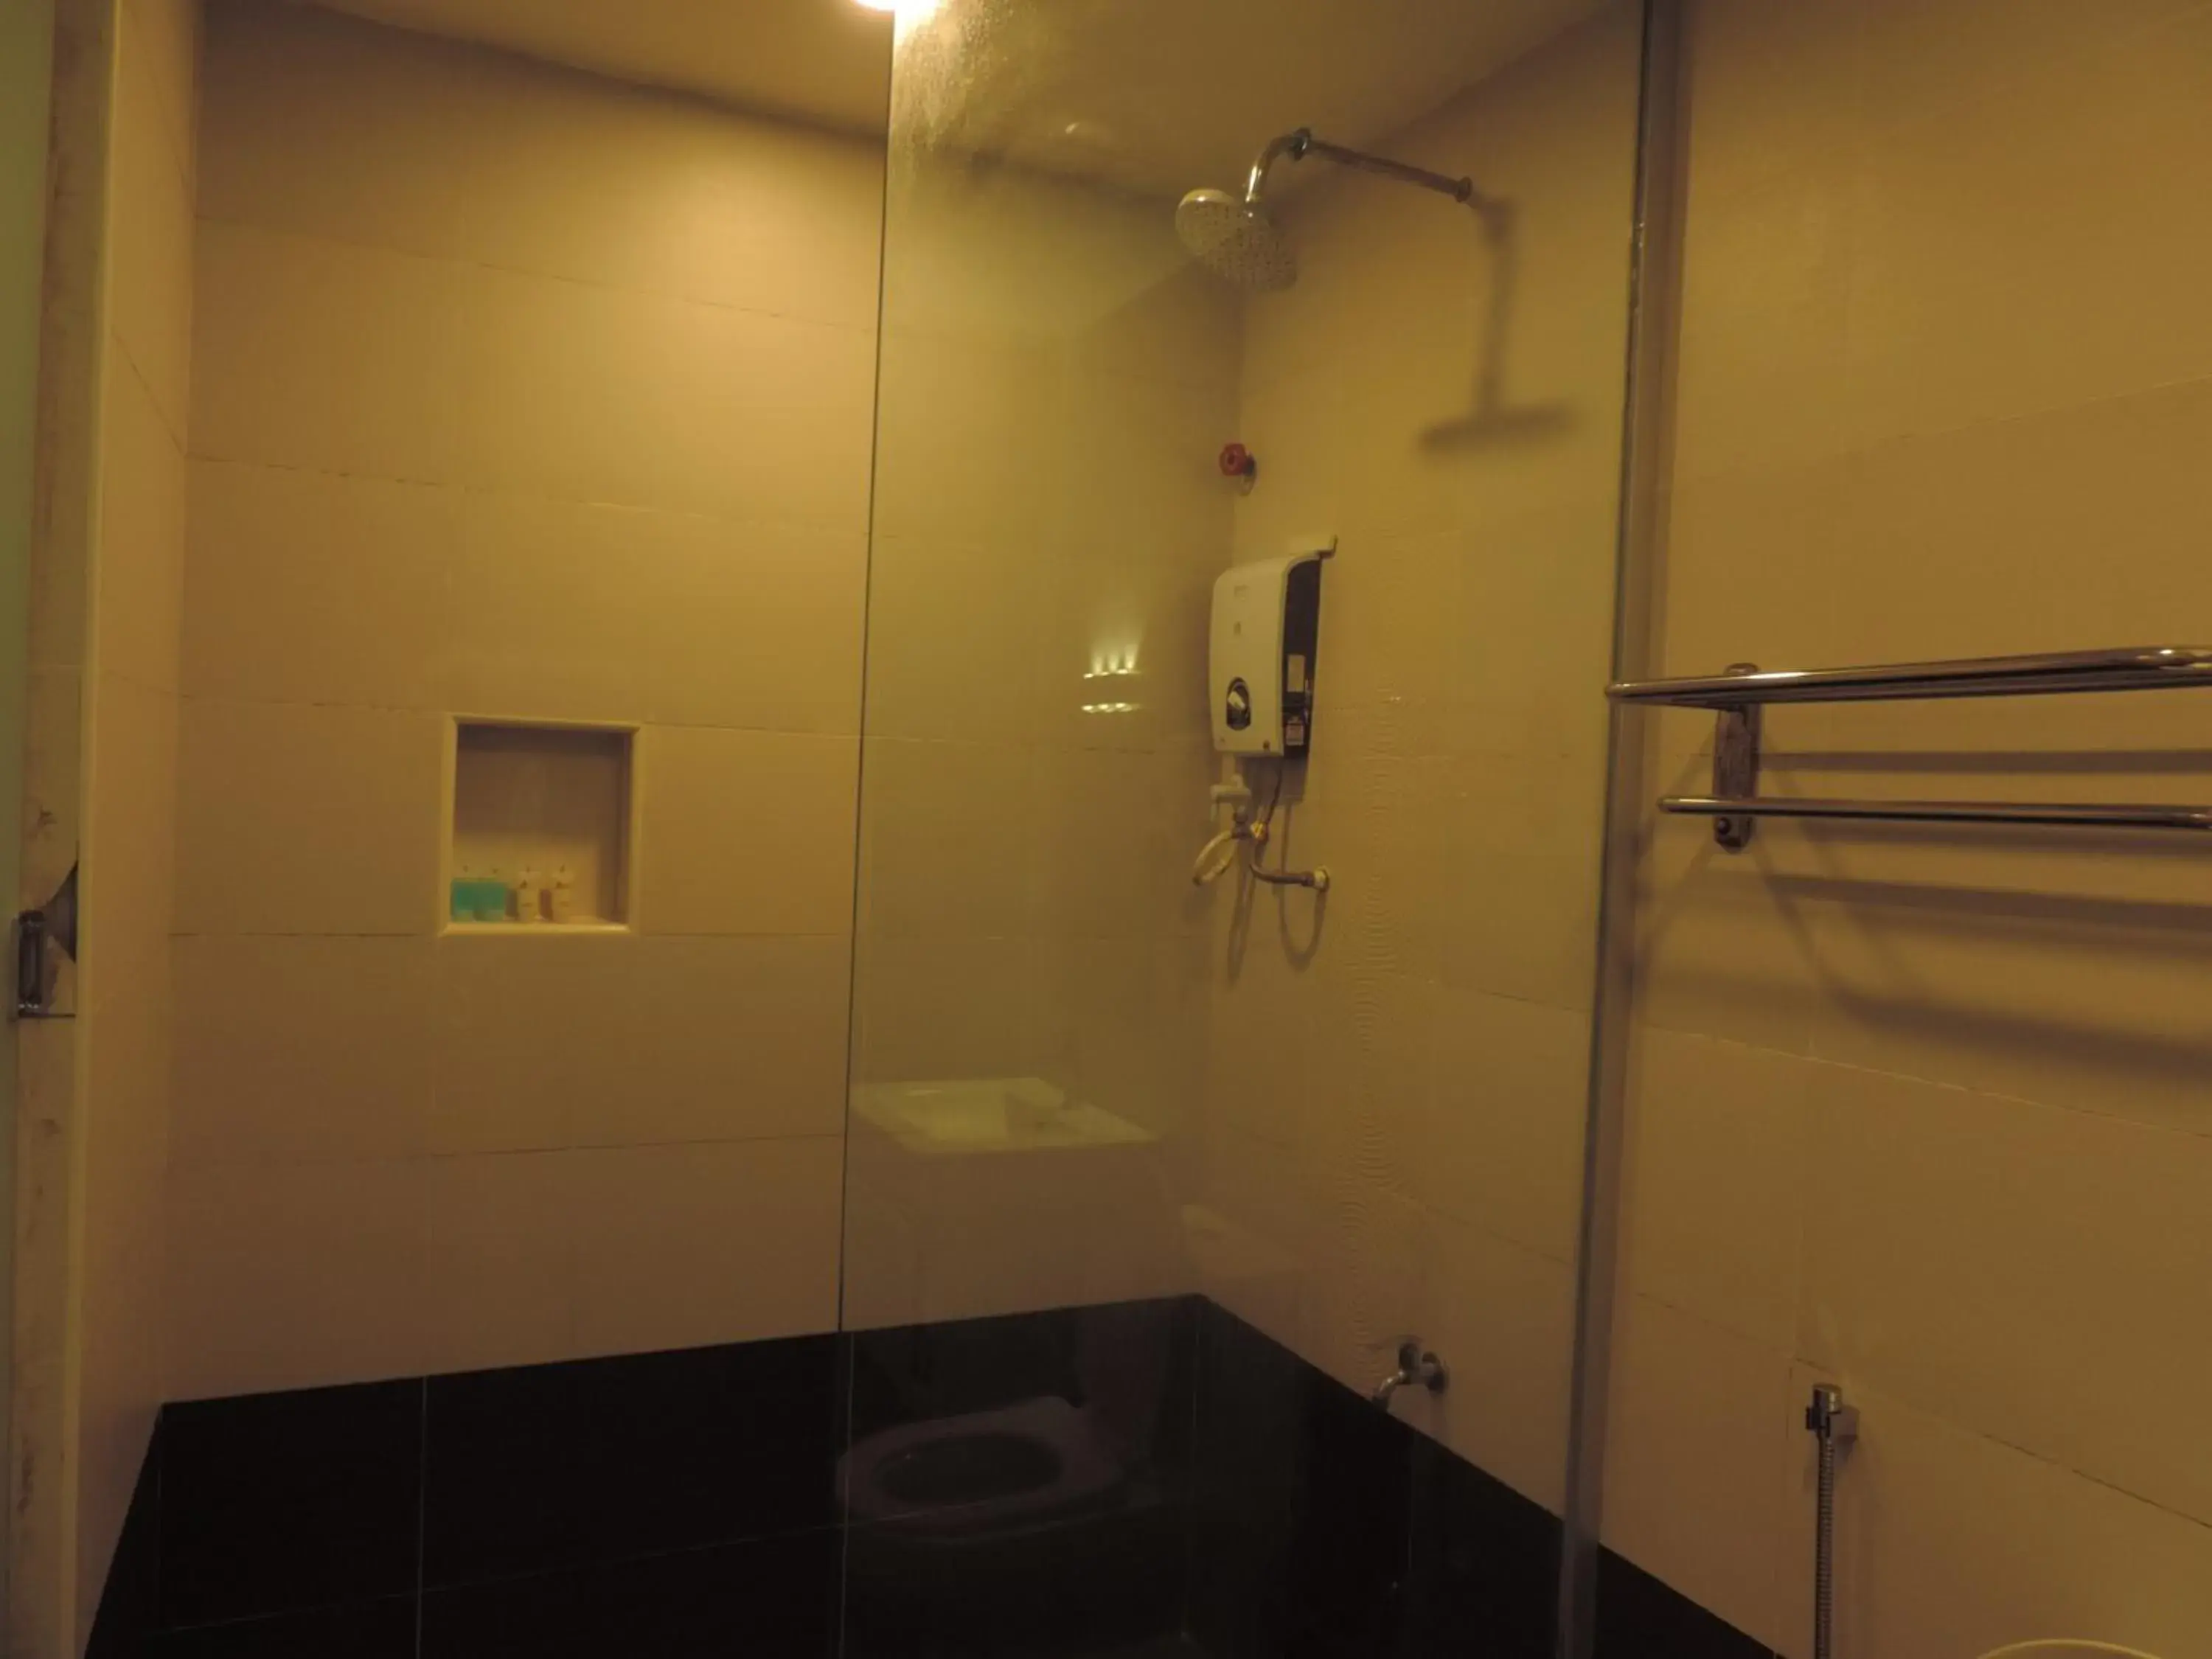 Bathroom in Golden Leaf Hotel Danga Bay 5 minutes Hospital Hsa,Zoo,Angsana Mall,20 minutes Utm, Legoland